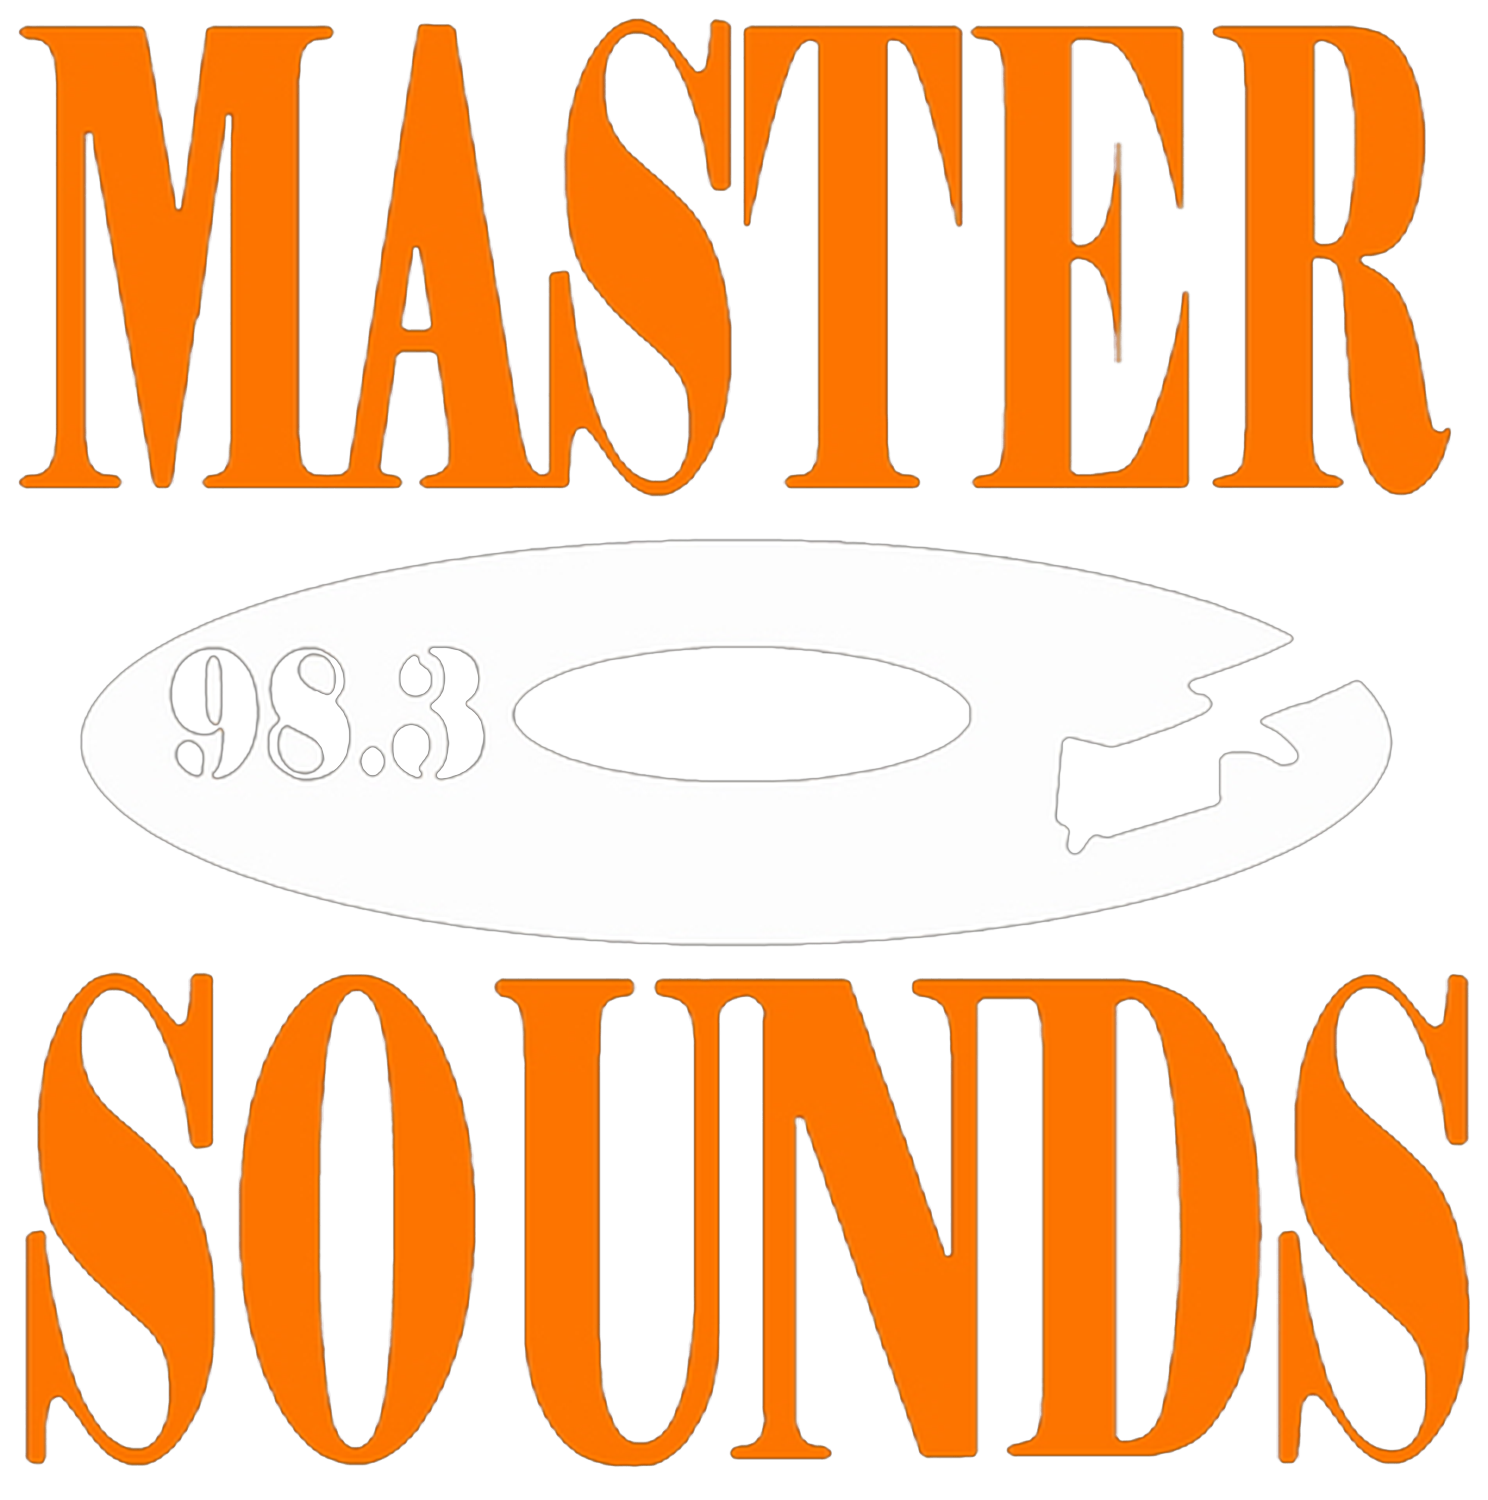 GTASA-Master-Sounds-98-3-Logo